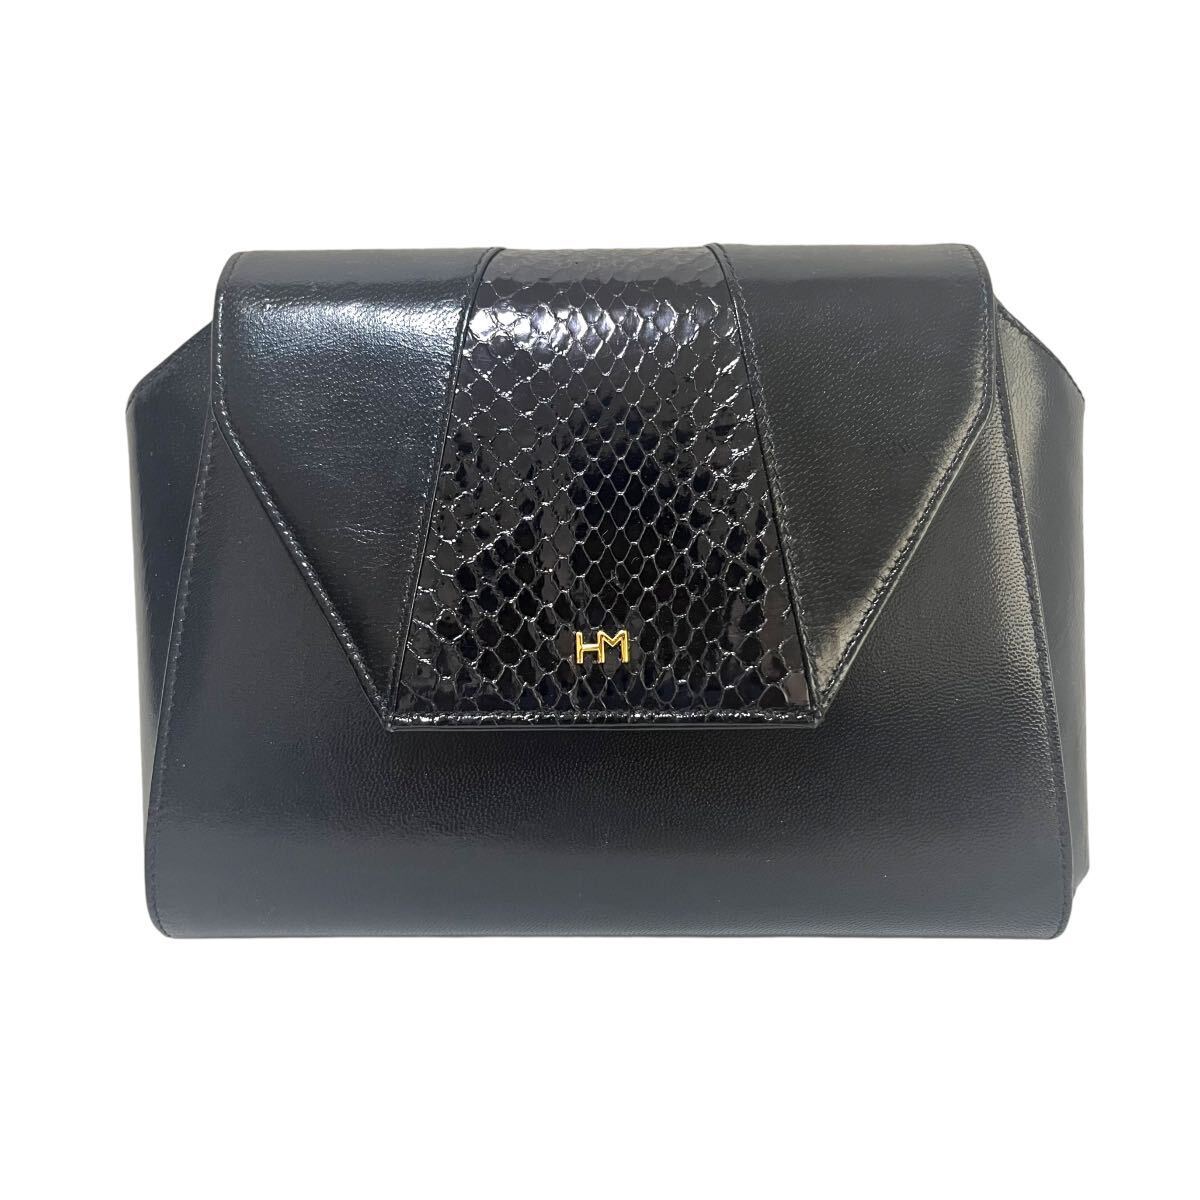 [ condition excellent ]HANAE MORI( is na emo li) clutch bag second bag leather black 